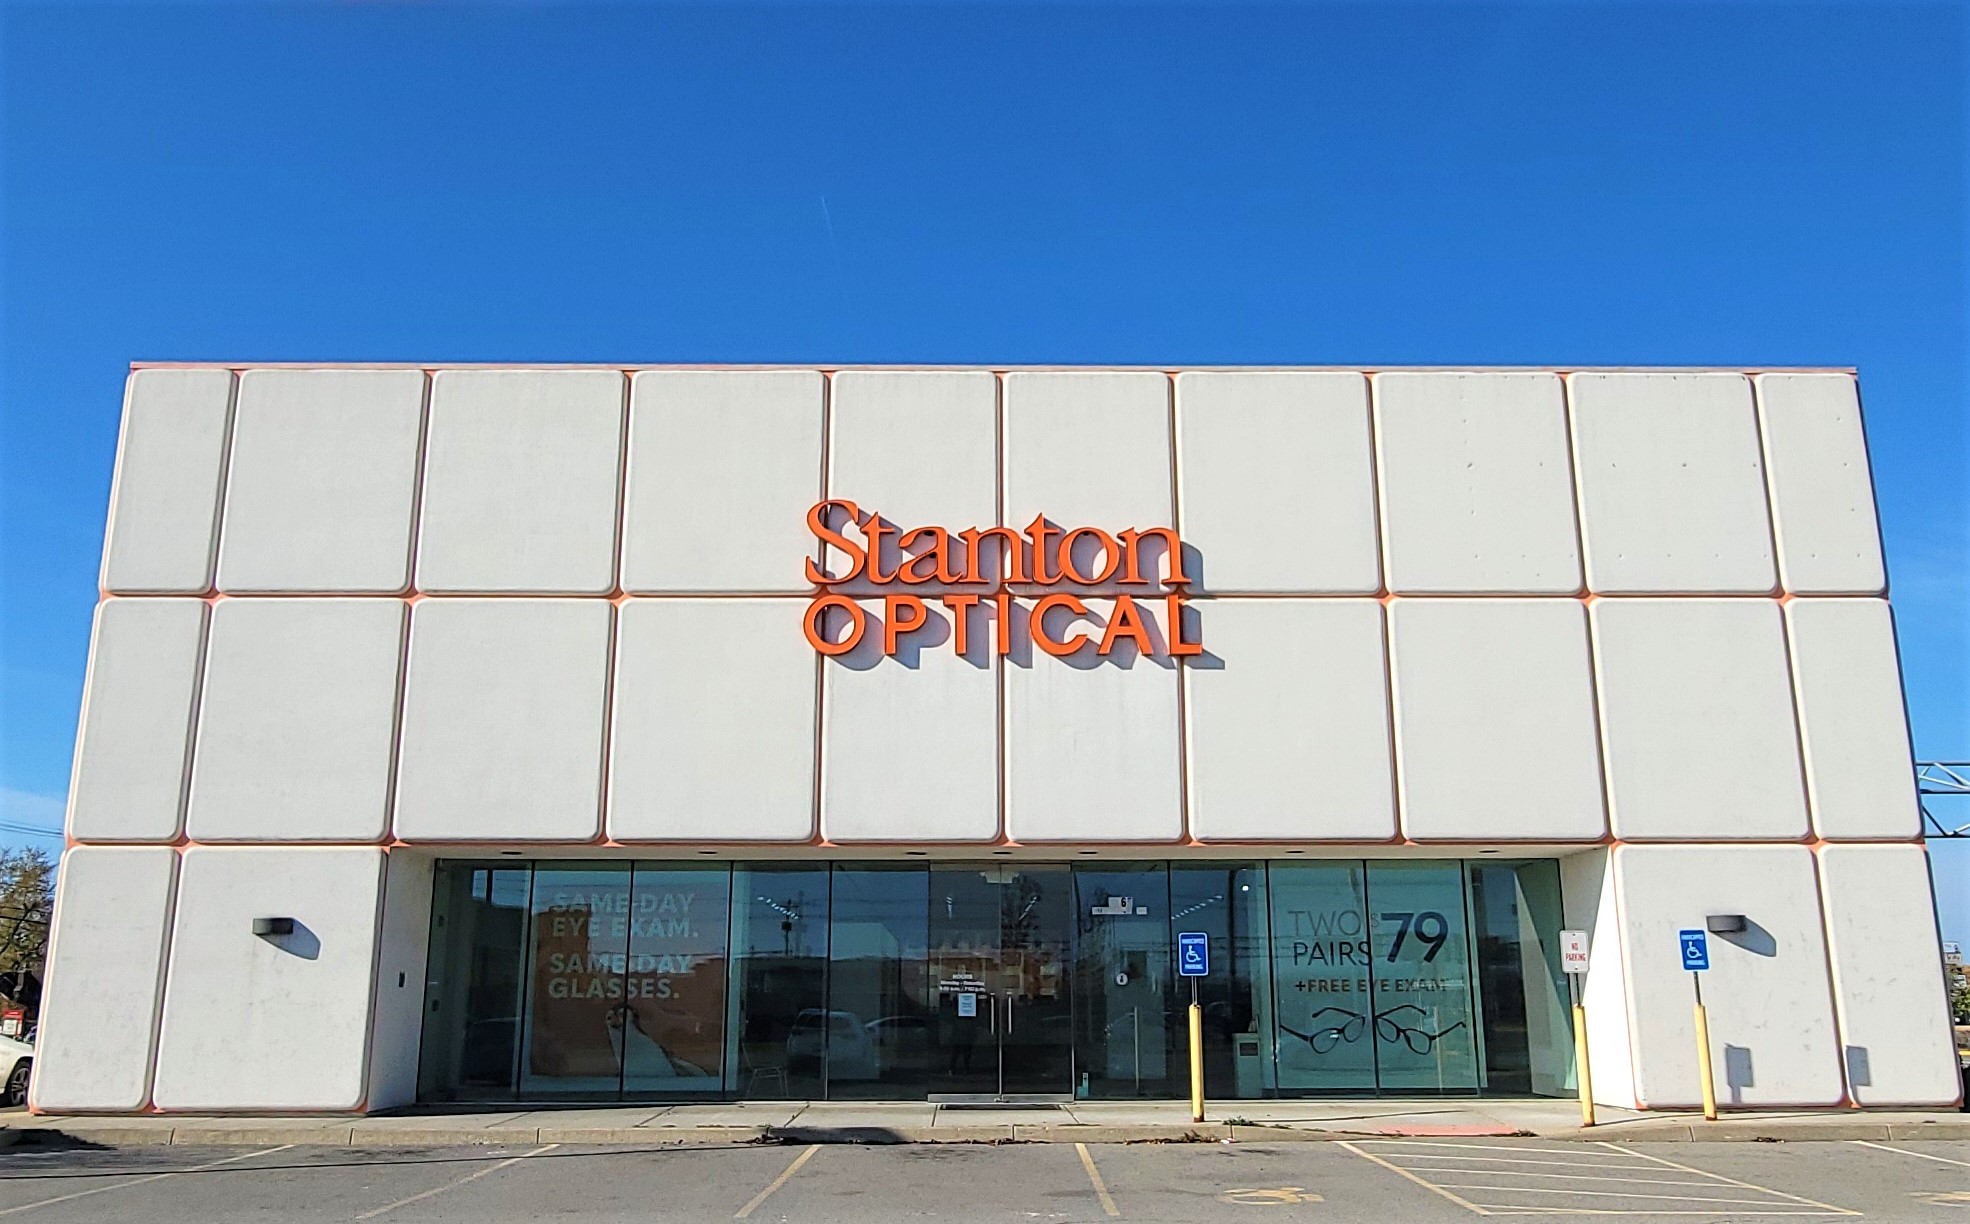 Storefront at Stanton Optical store in Tonawanda, NY 14150